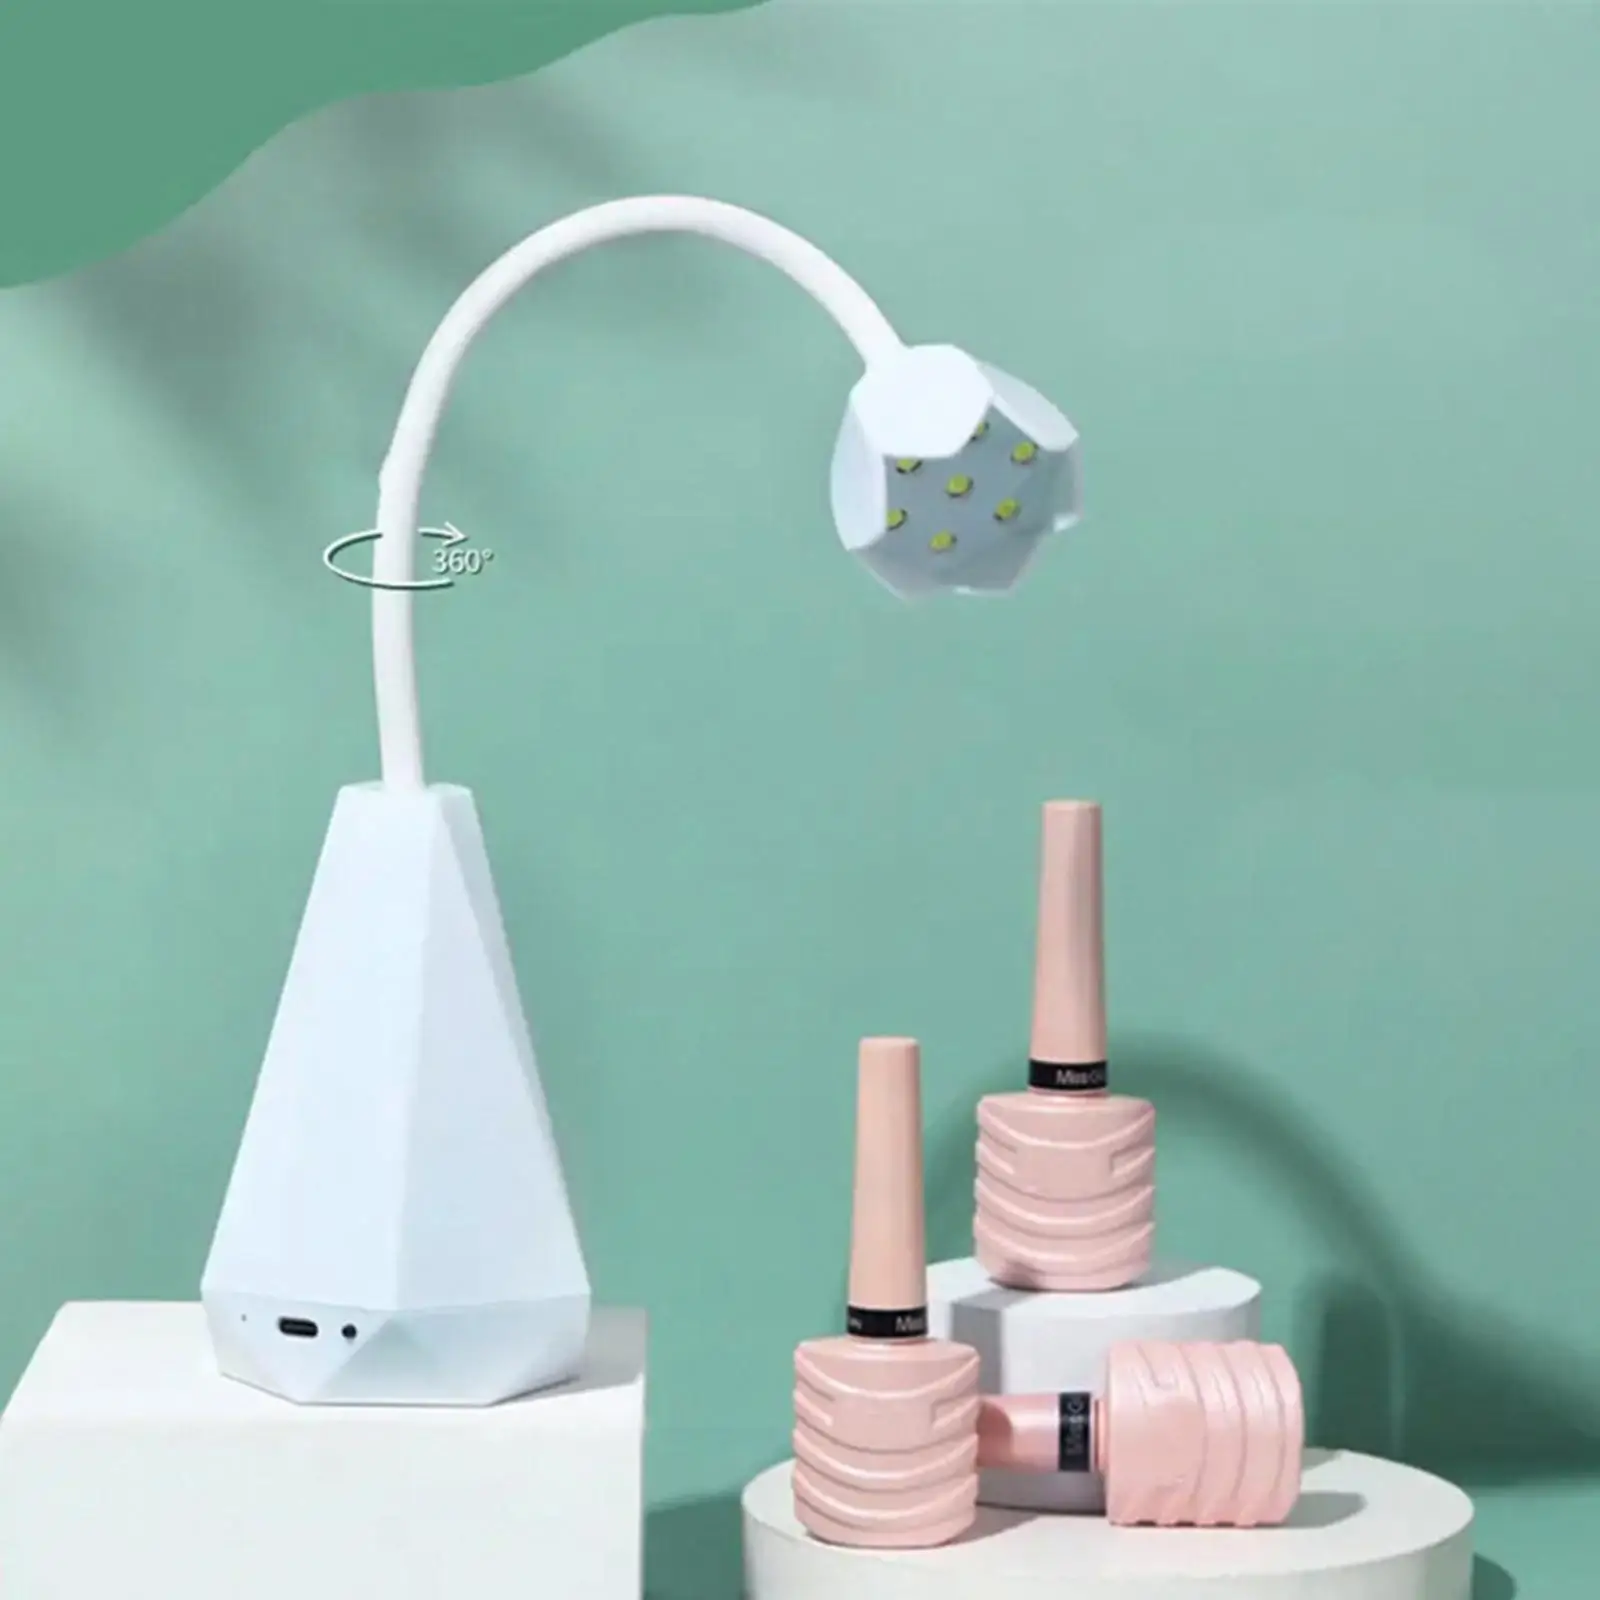 LED Nail Lamp Nail Dryer Flexible Desk Lamps Rotatable for Nail Art Home DIY